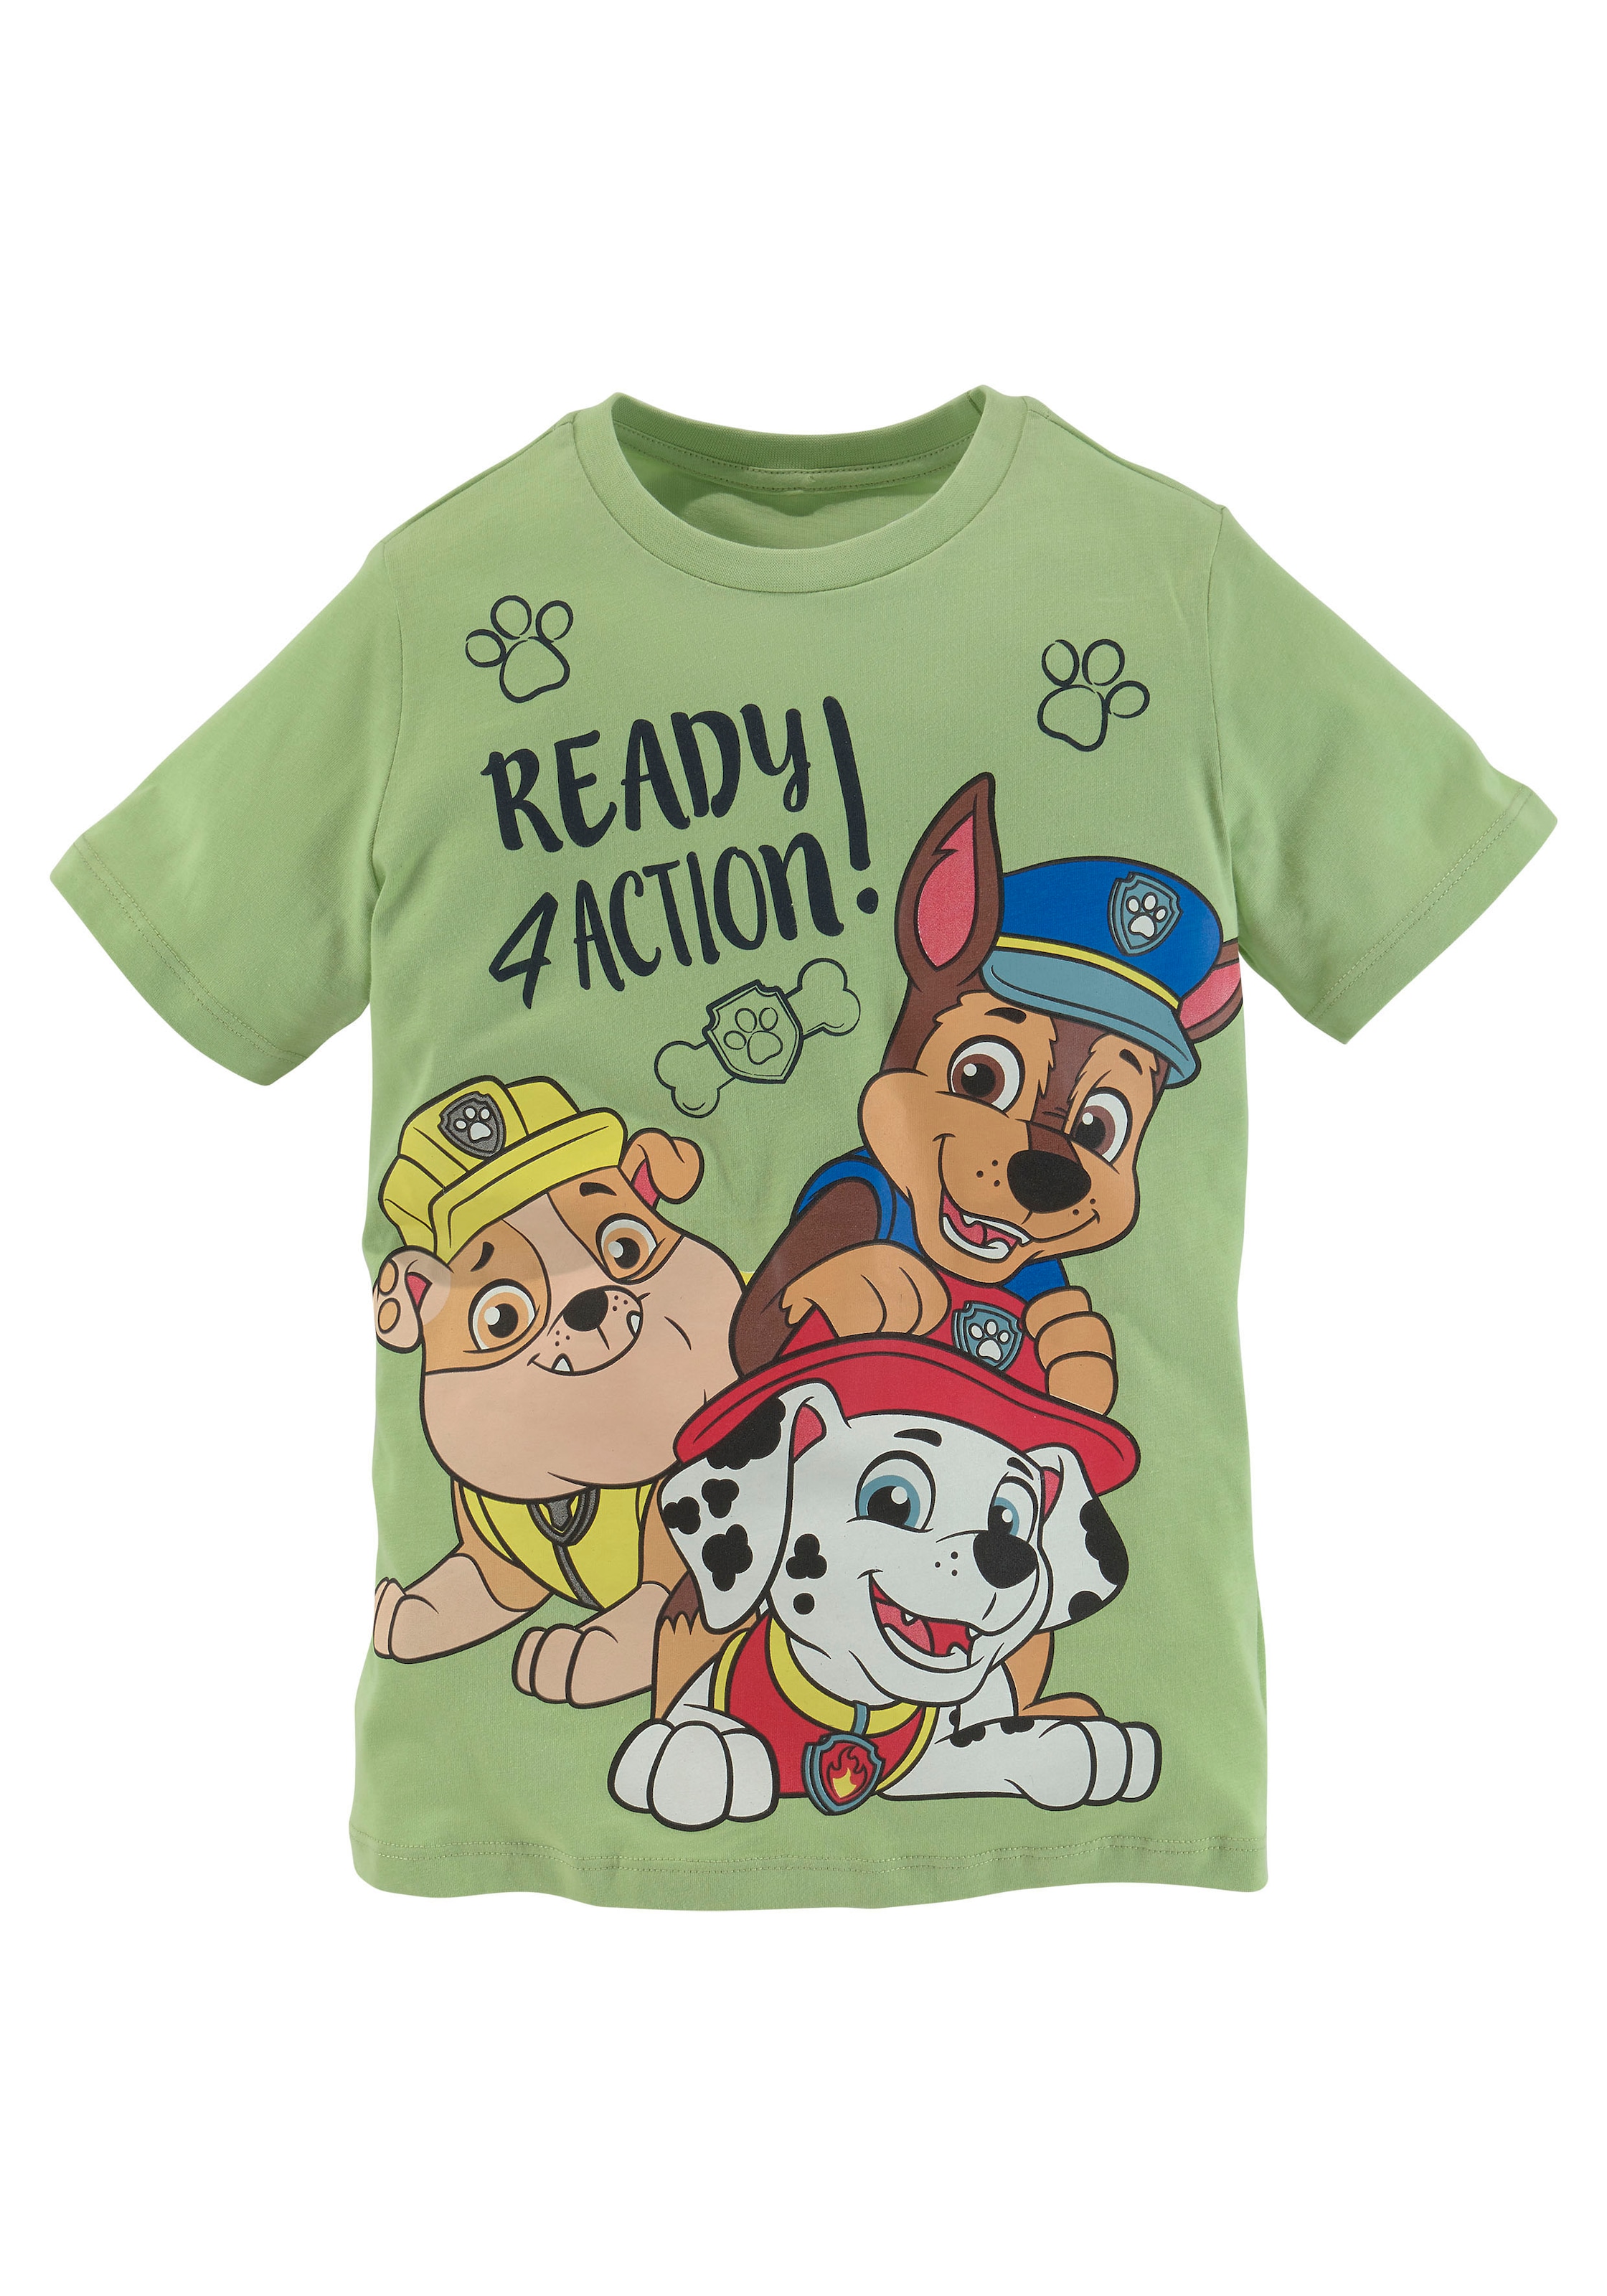 PAW PATROL T-Shirt »Ready action!« jetzt bestellen 4